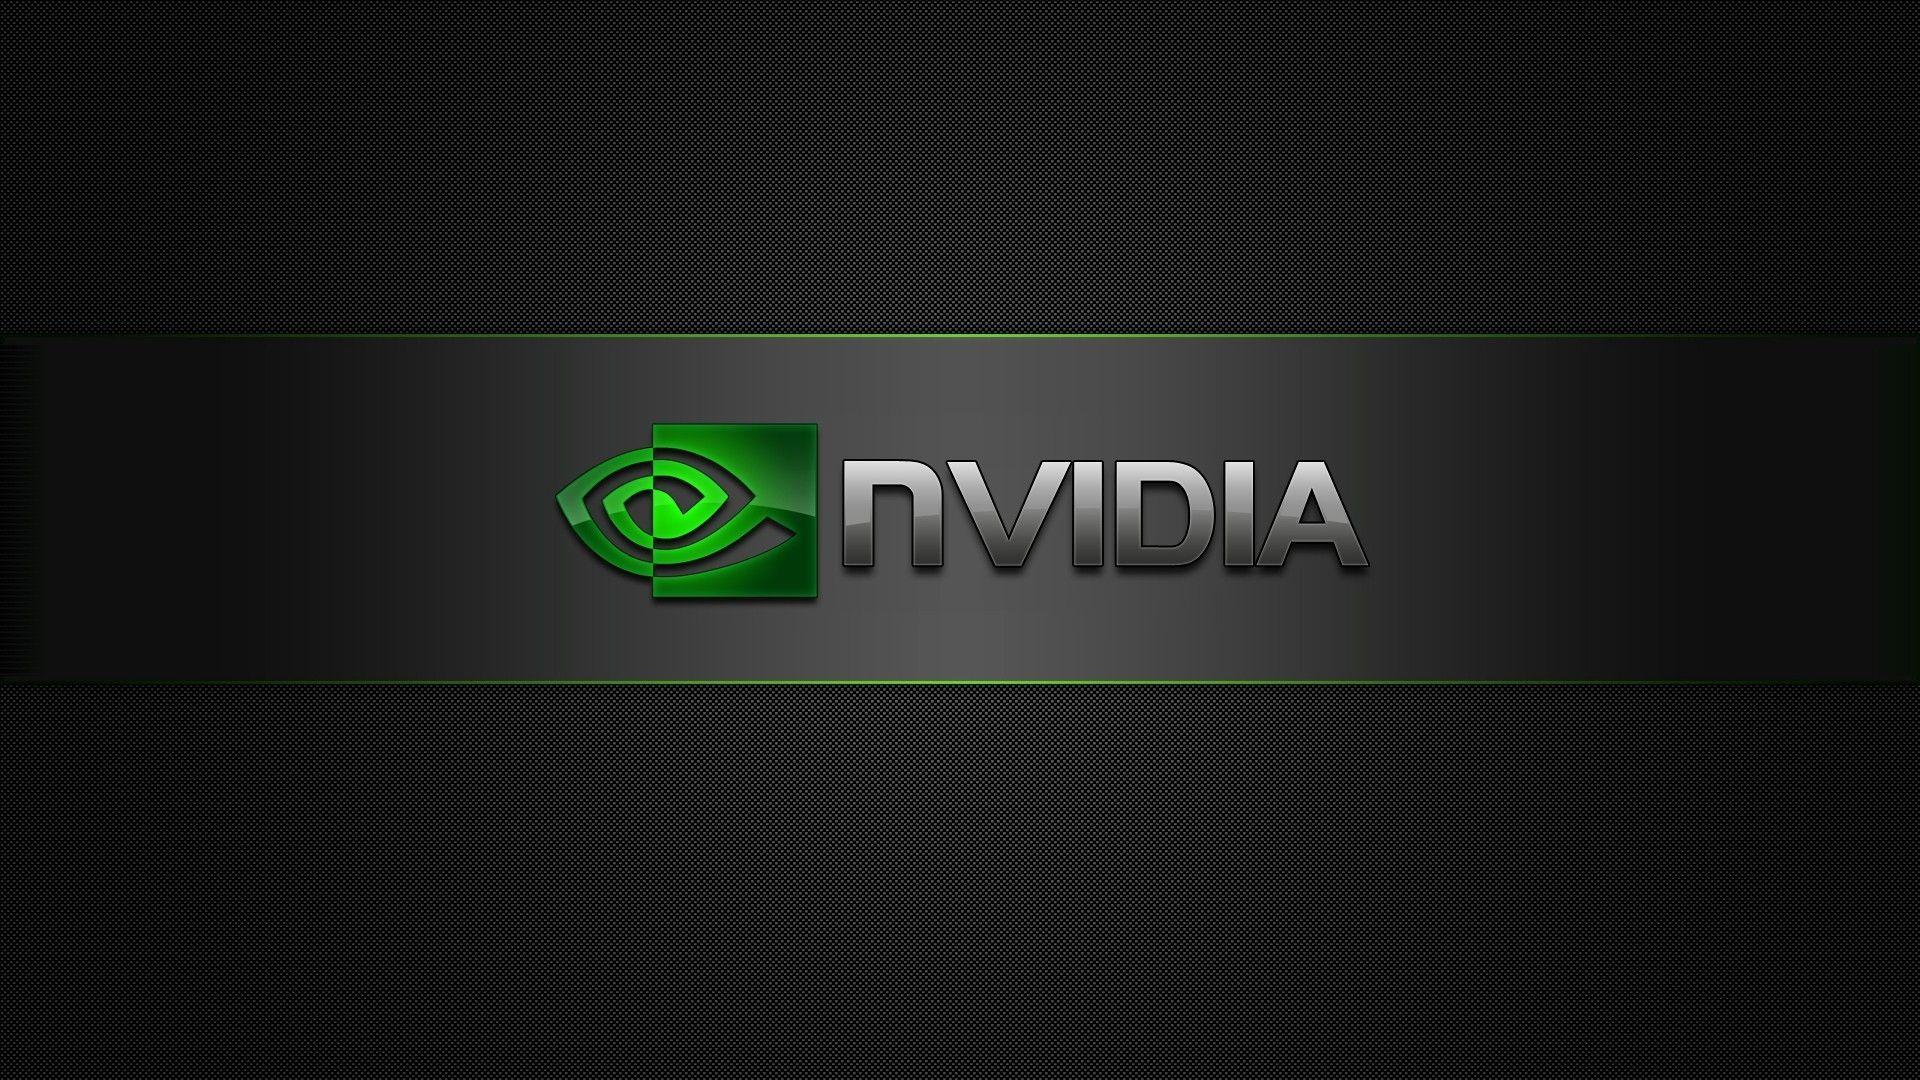 Nvidia Brand Logo, HD Logo, 4k Wallpaper, Image, Background